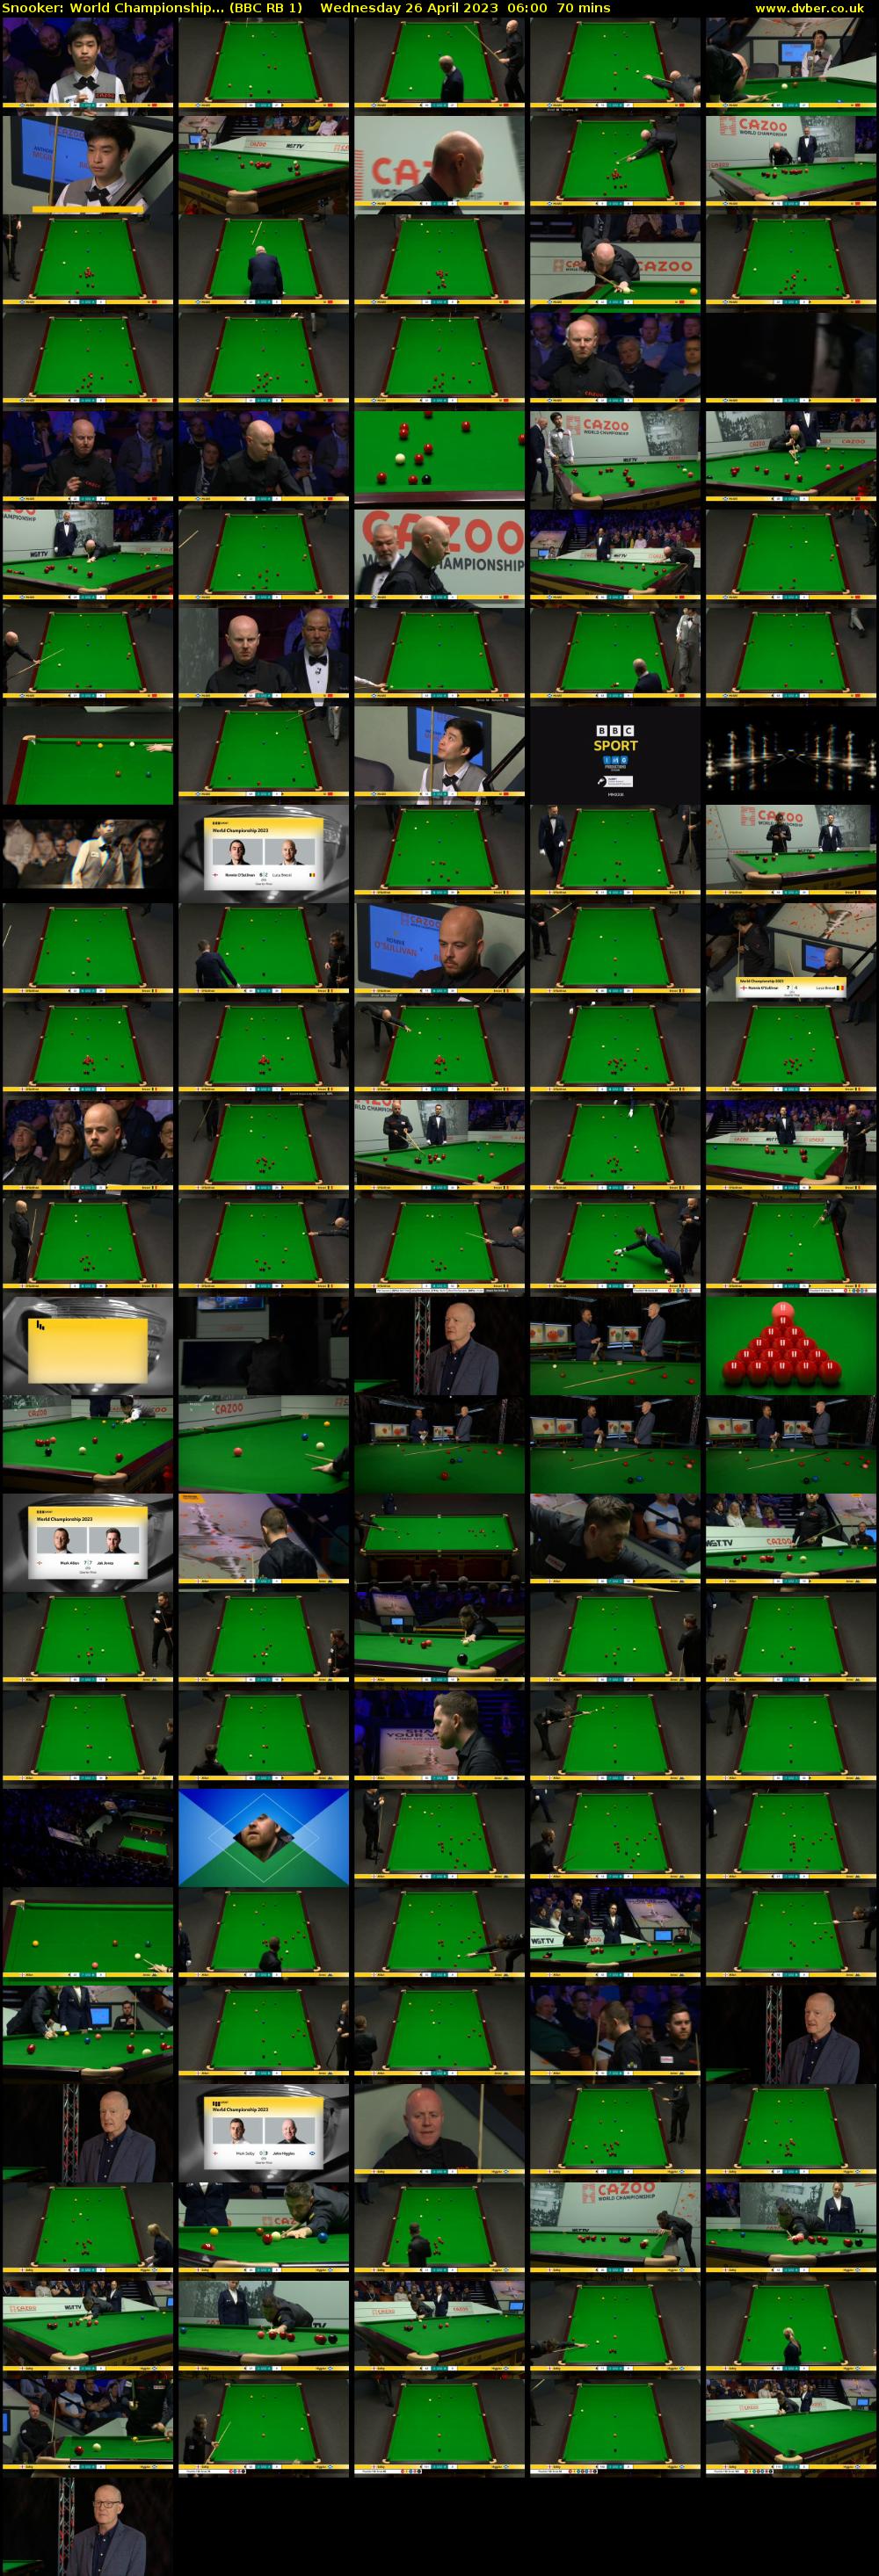 Snooker: World Championship... (BBC RB 1) Wednesday 26 April 2023 06:00 - 07:10